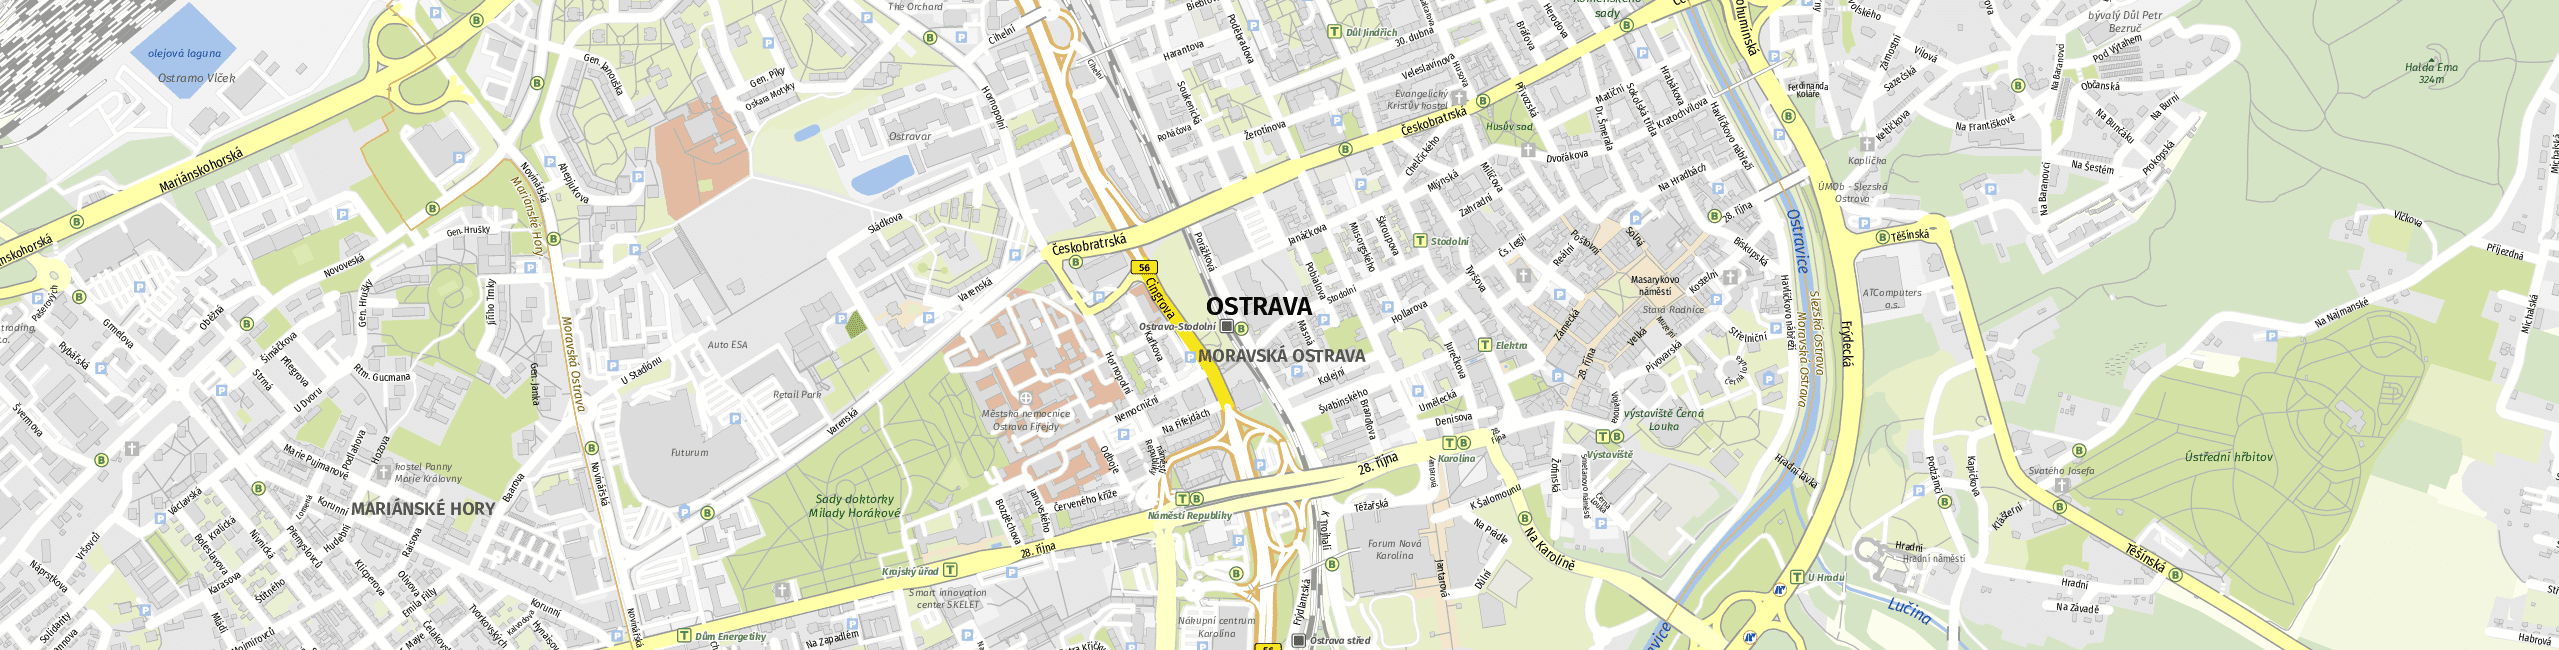 Stadtplan Ostrava zum Downloaden.